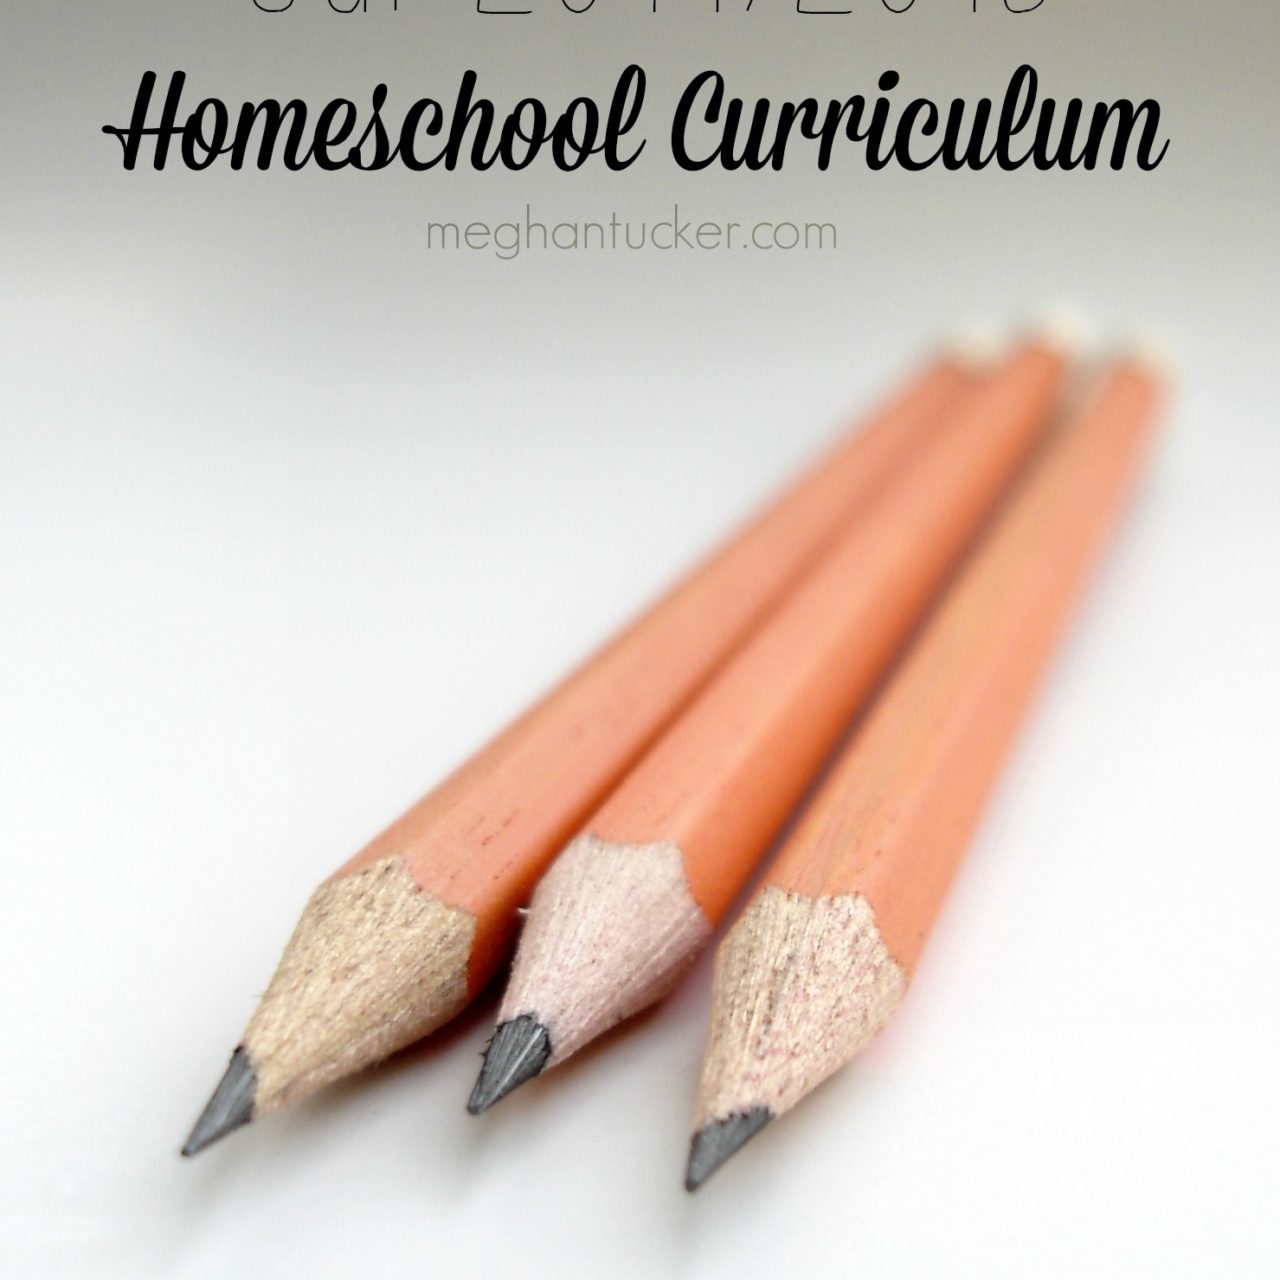 Our 2014/2015 Homeschool Curriculum